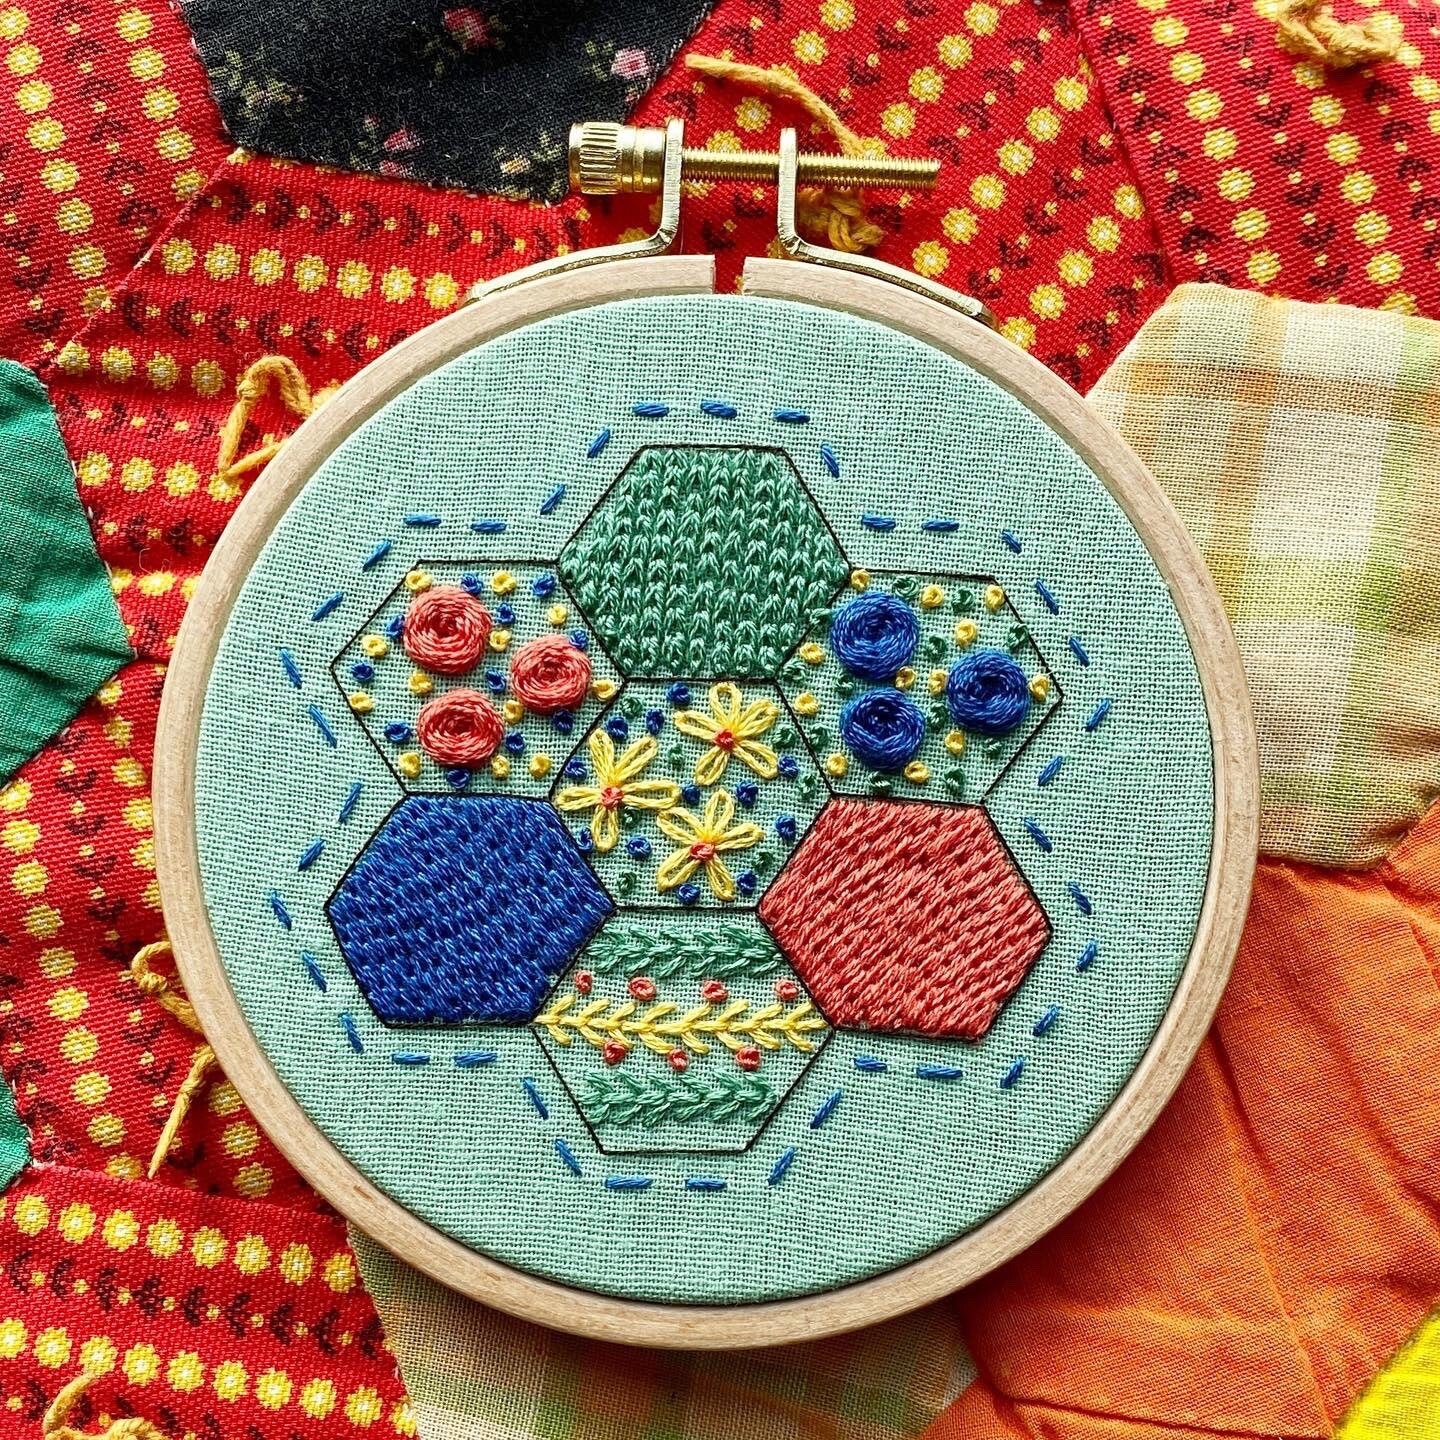 Sunshine and Rainbows Beginner Embroidery Kit – Rosanna Diggs